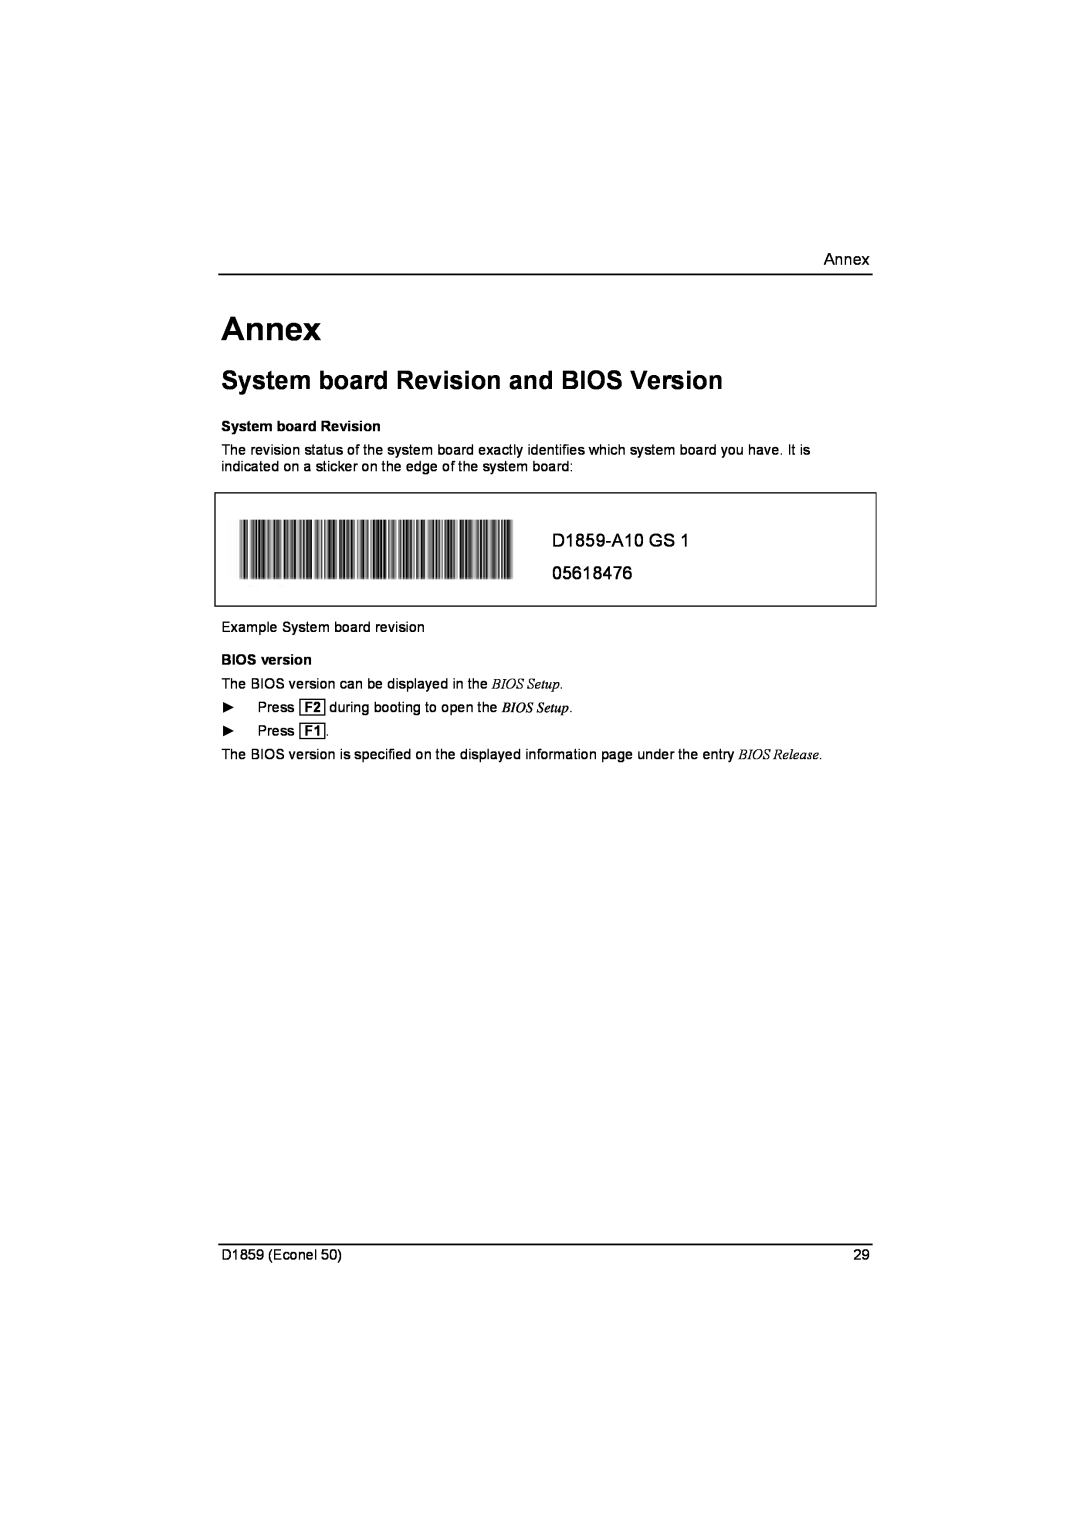 Fujitsu technical manual Annex, System board Revision and BIOS Version, D1859-A10 GS 05618476, BIOS version 